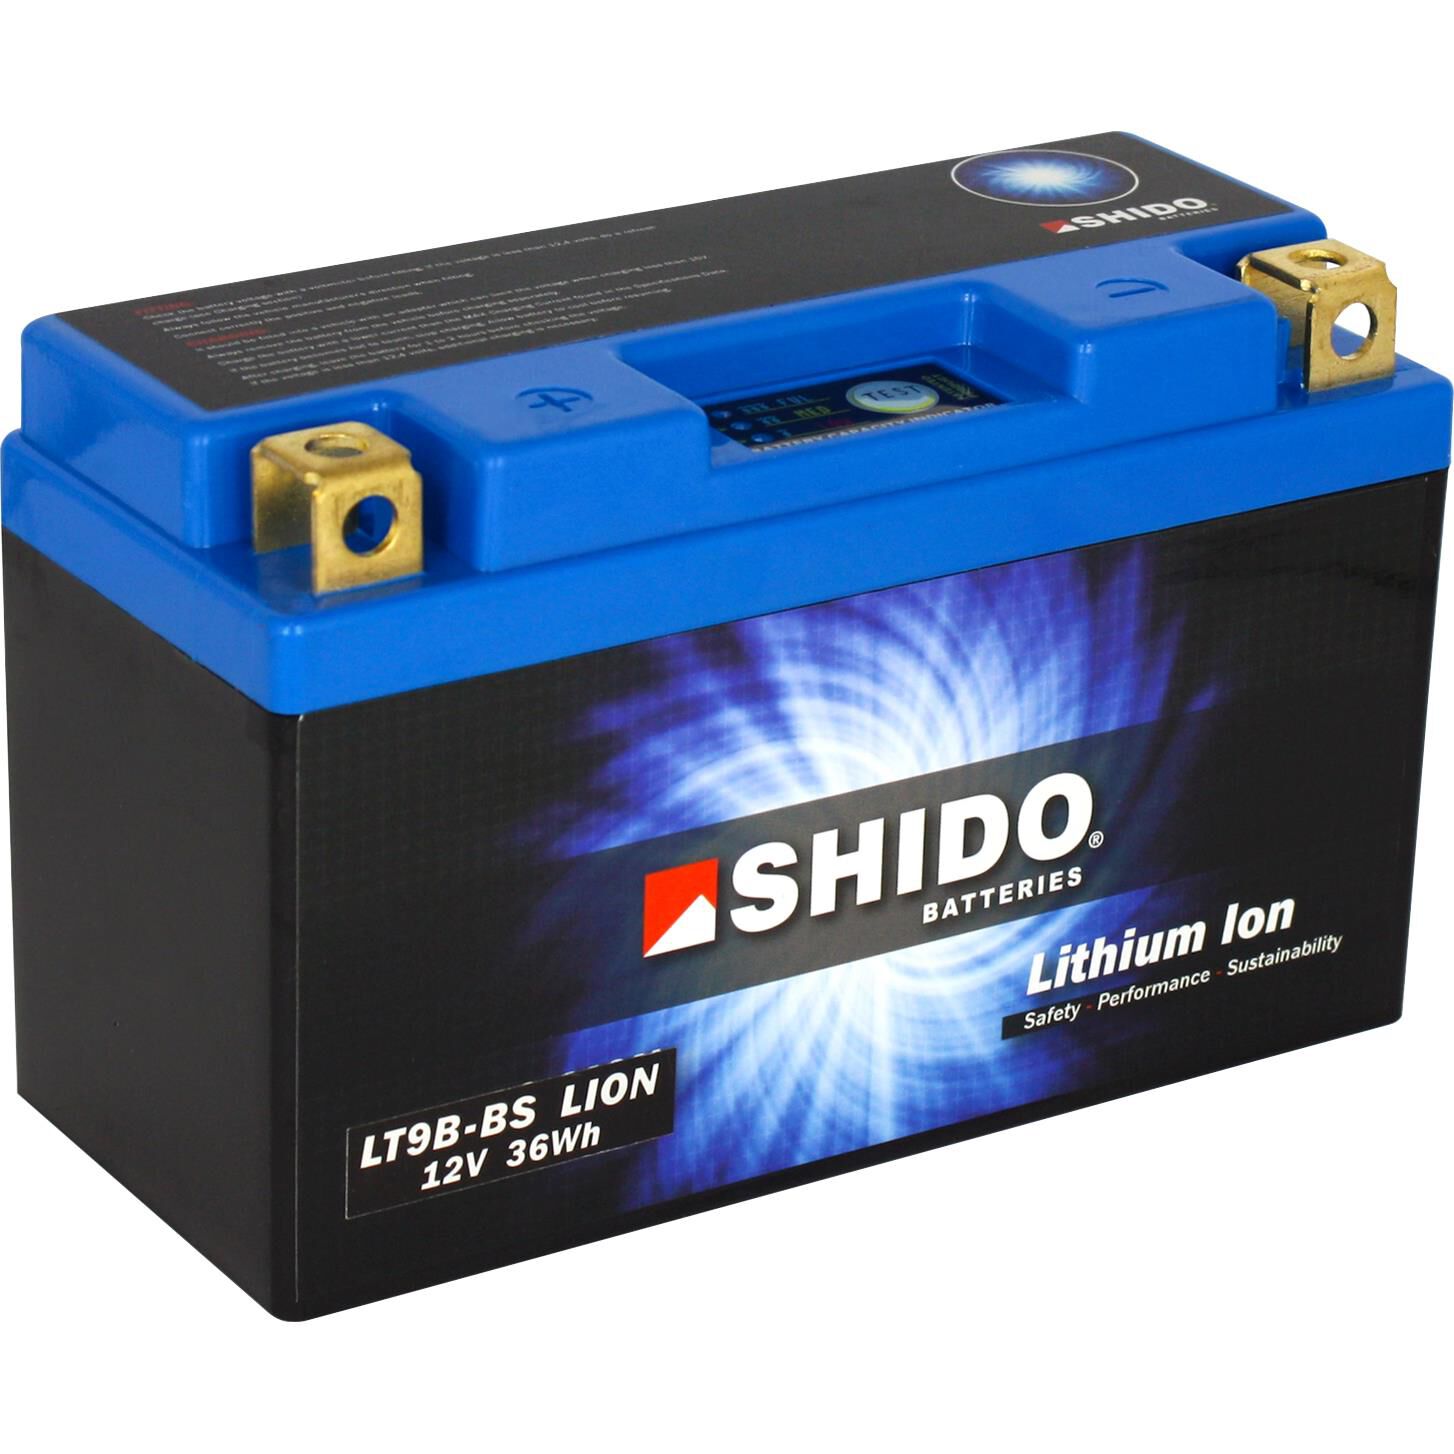 Shido Lithium Batterie LT9B-BS, 12V, 3Ah (YT9B-BS) von Shido